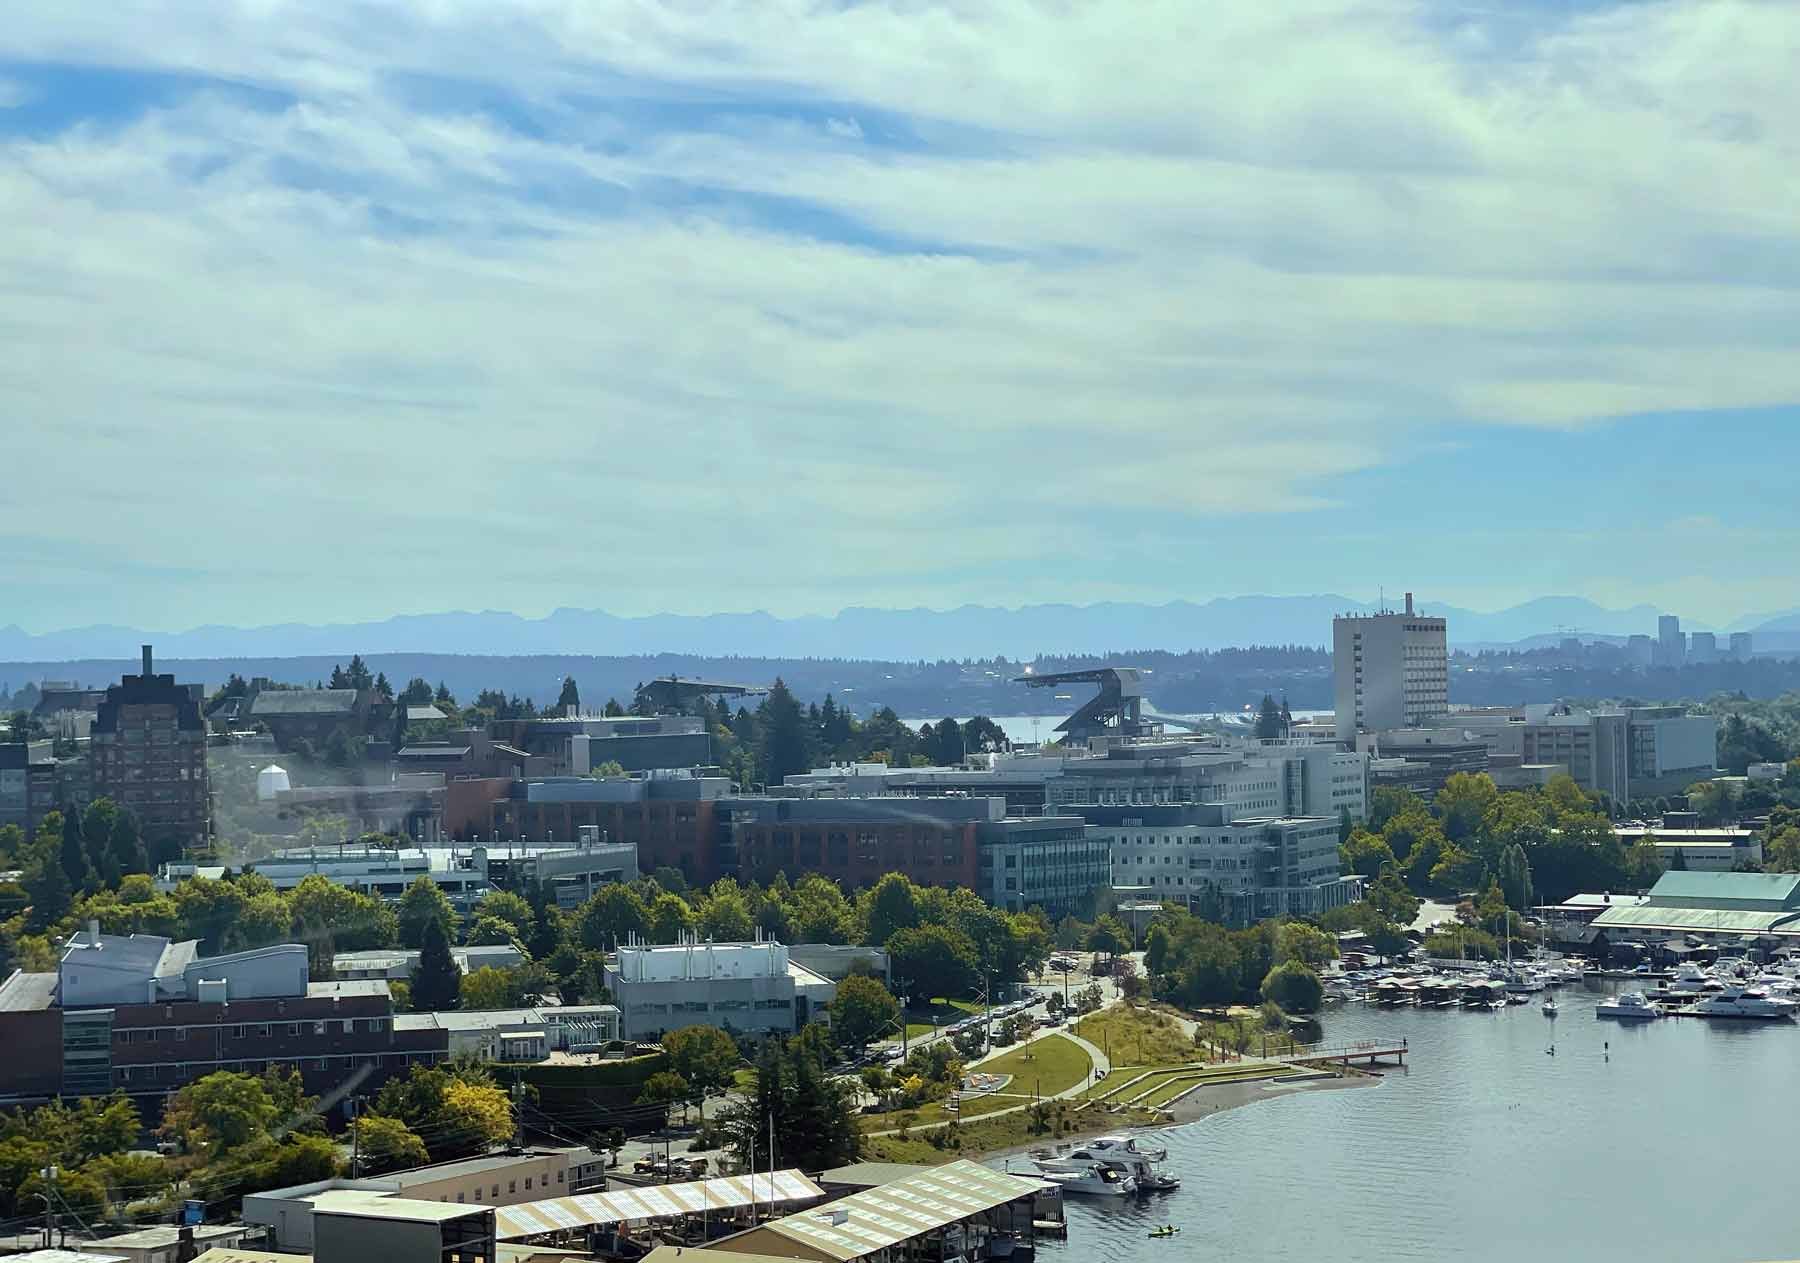 Univeristy-of-Washington-campus,-Lake-union-and-Bellevue-skylines-.jpg